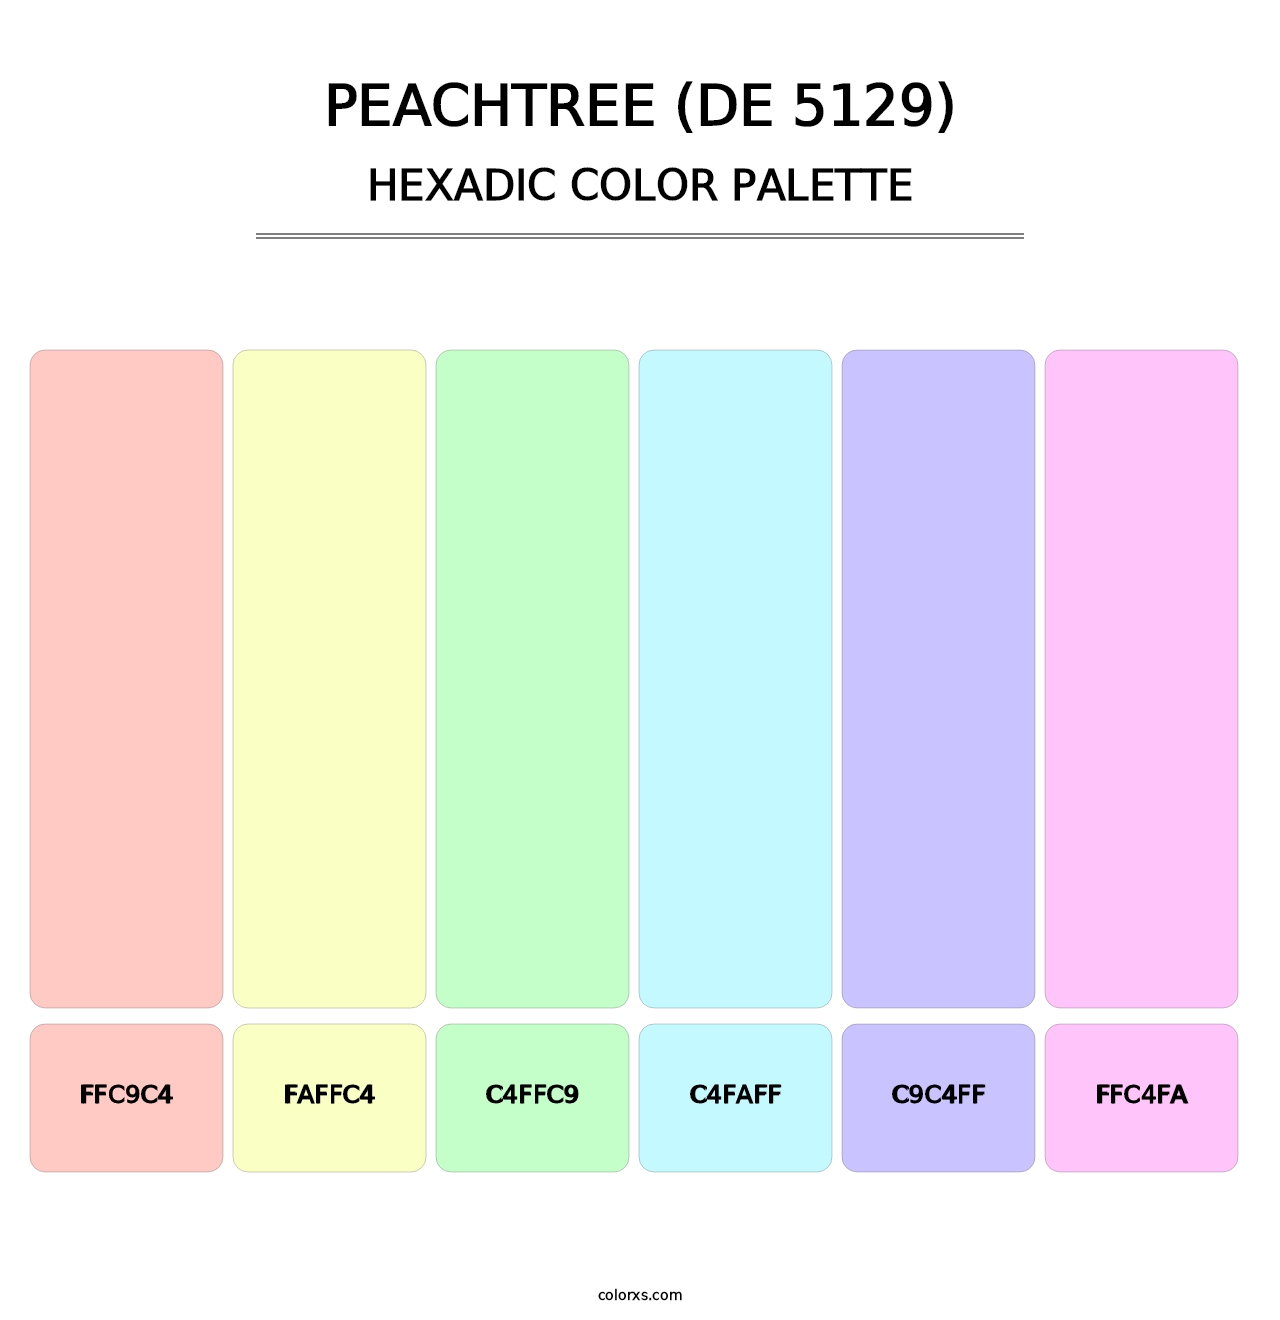 Peachtree (DE 5129) - Hexadic Color Palette